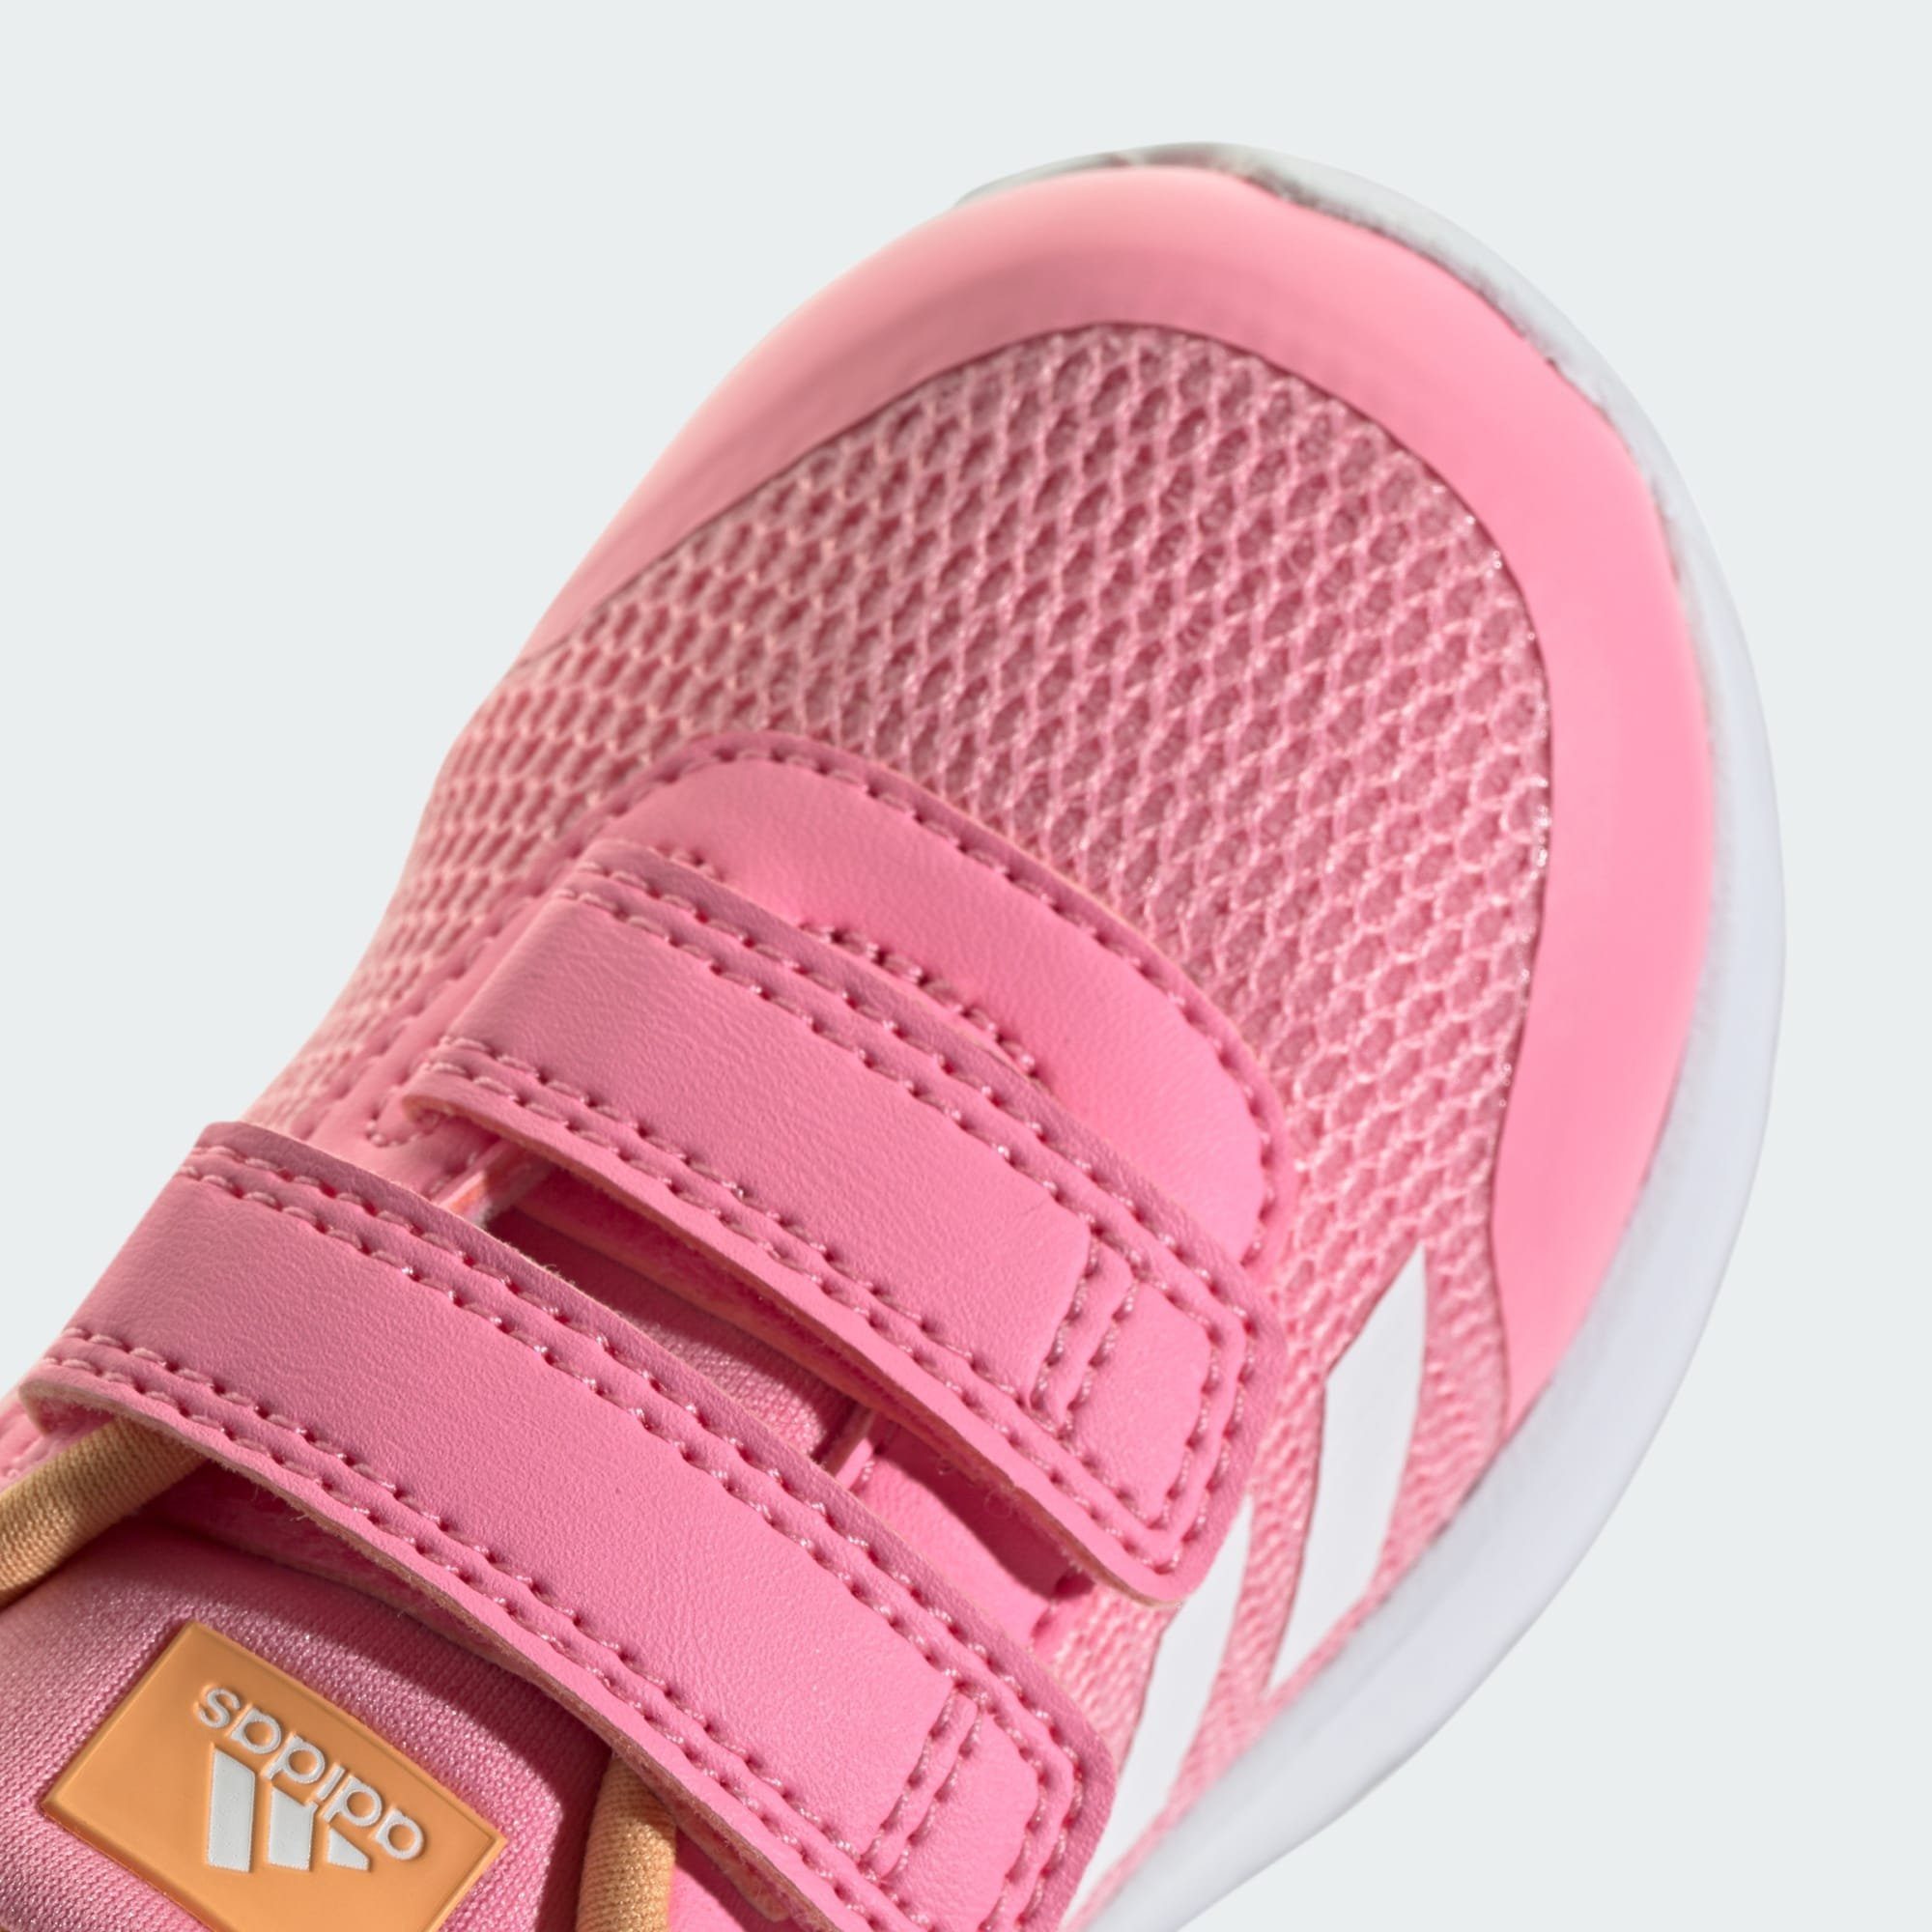 Cloud / Bliss TENSAUR Pink adidas SCHUH Sneaker RUN / Hazy Orange White Sportswear